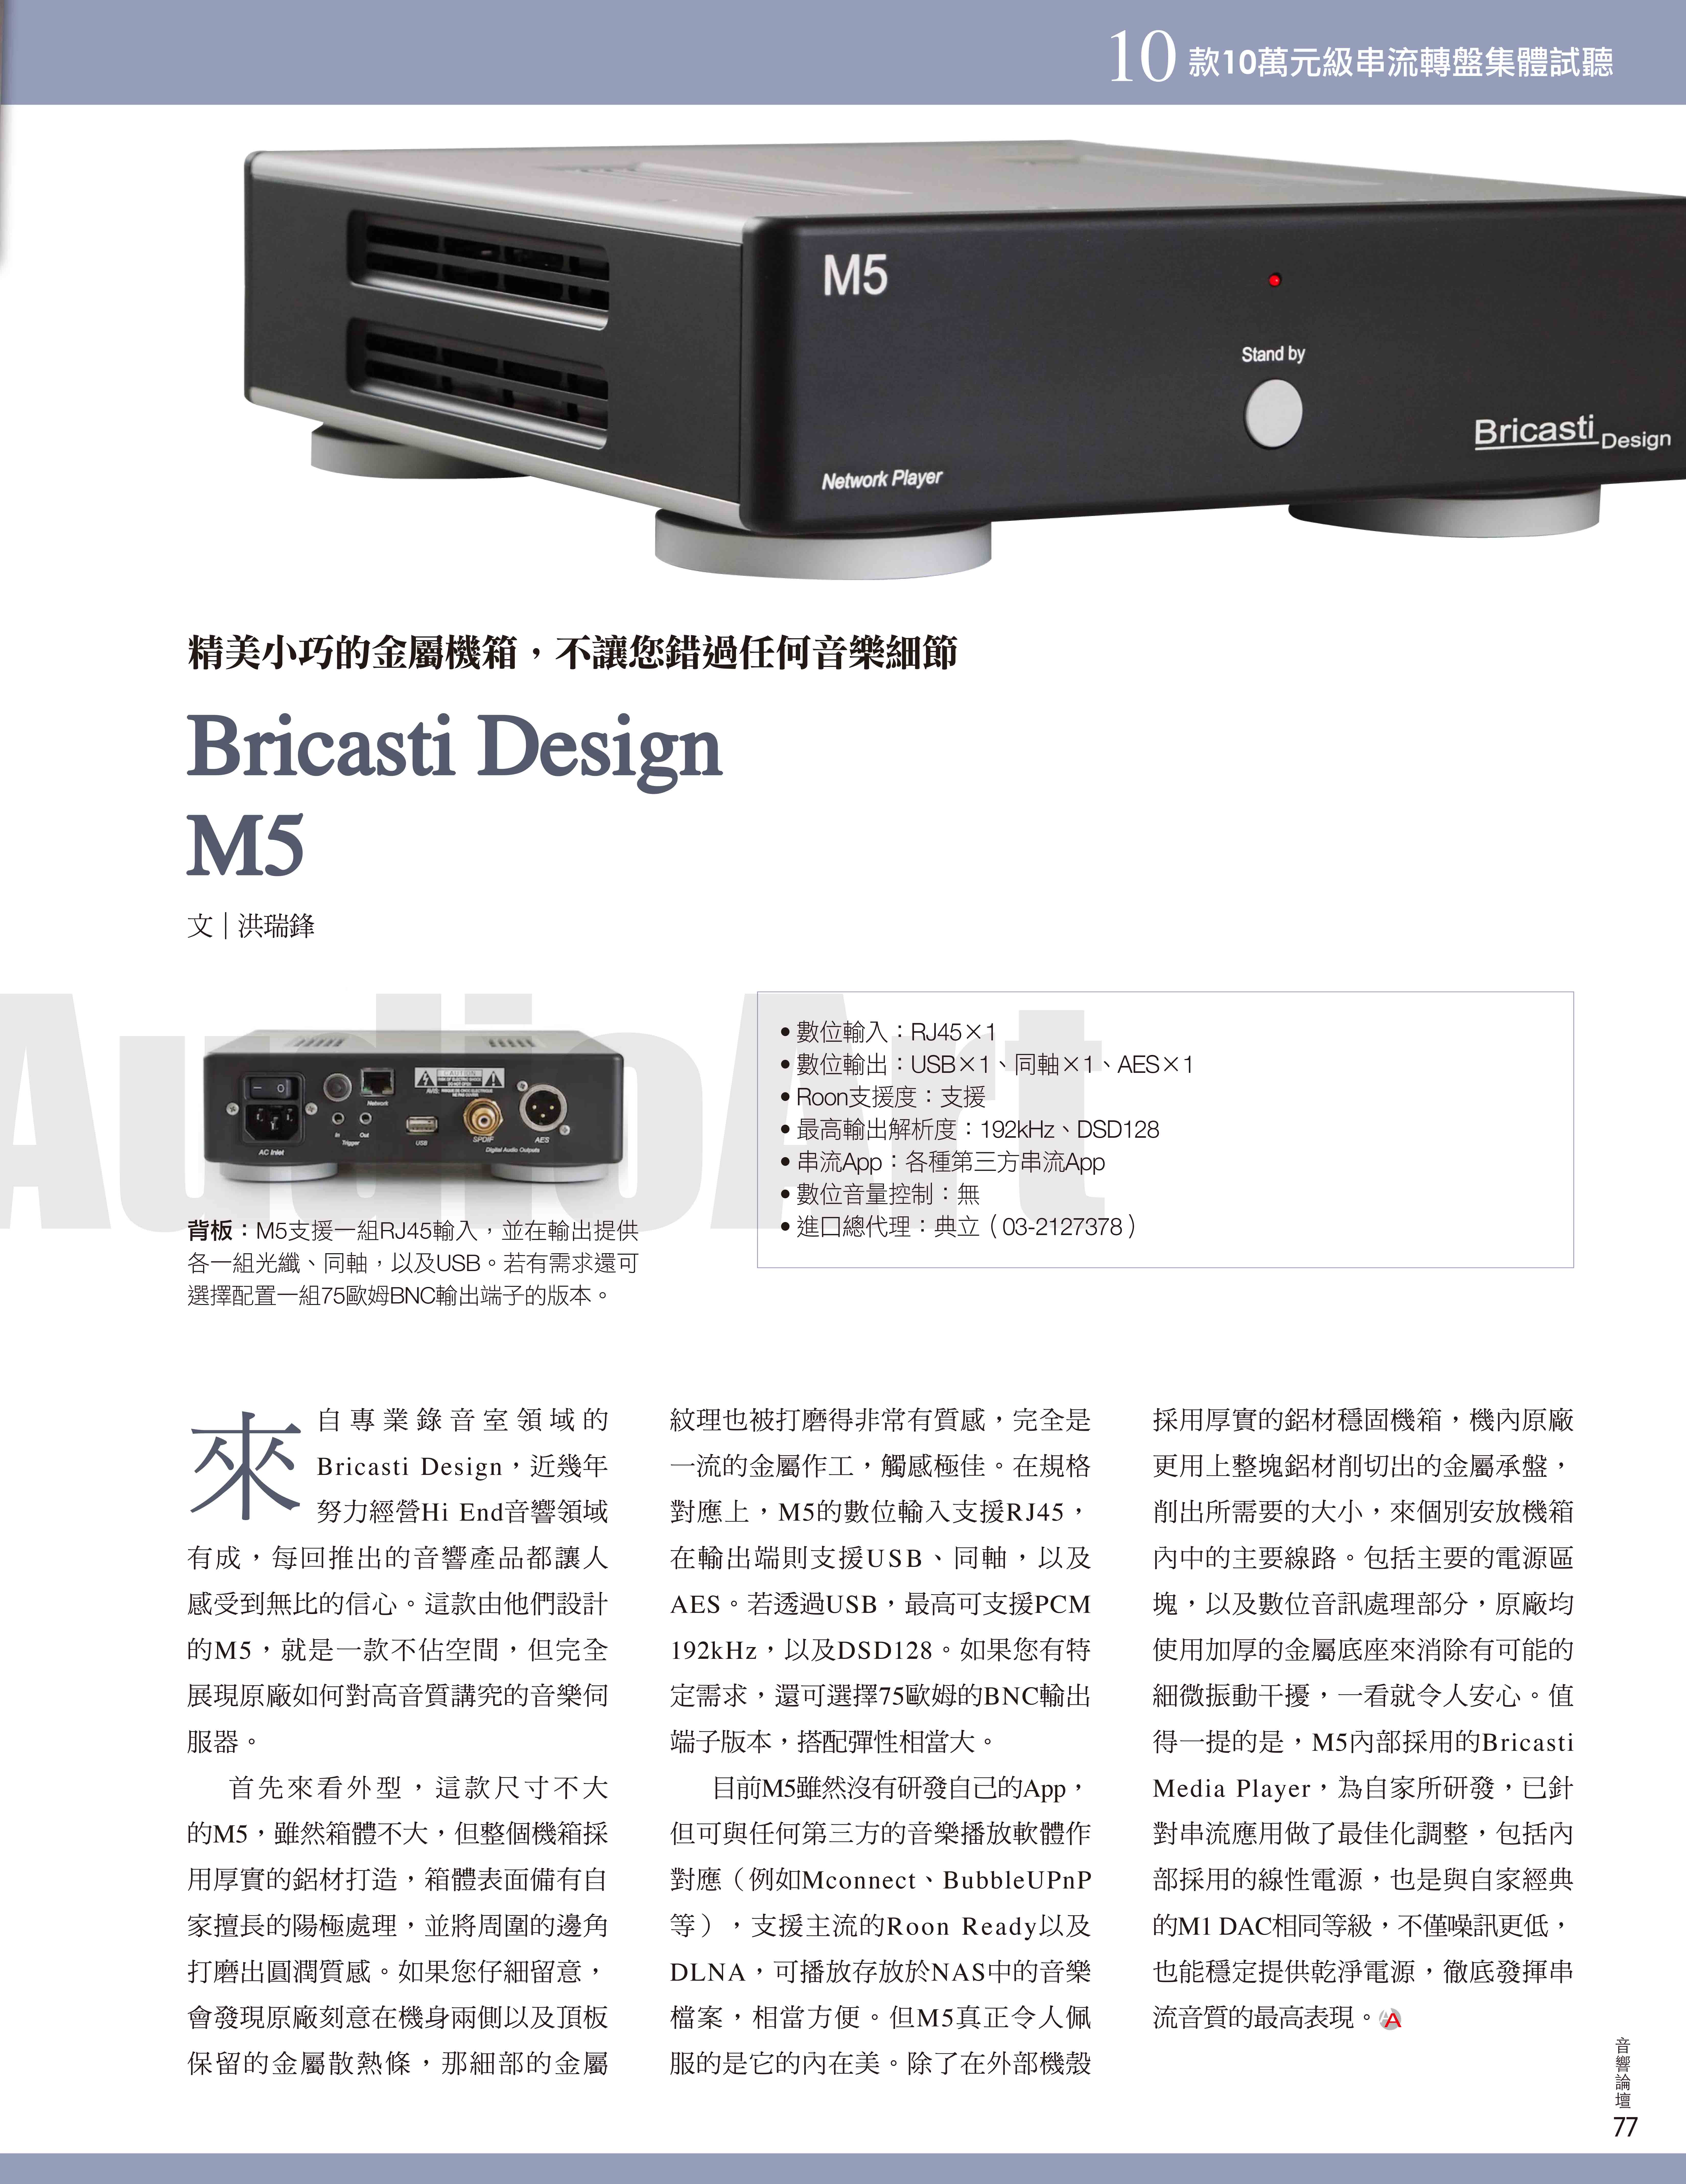 AA 410專題 10萬元串流~Bricasti Design M5